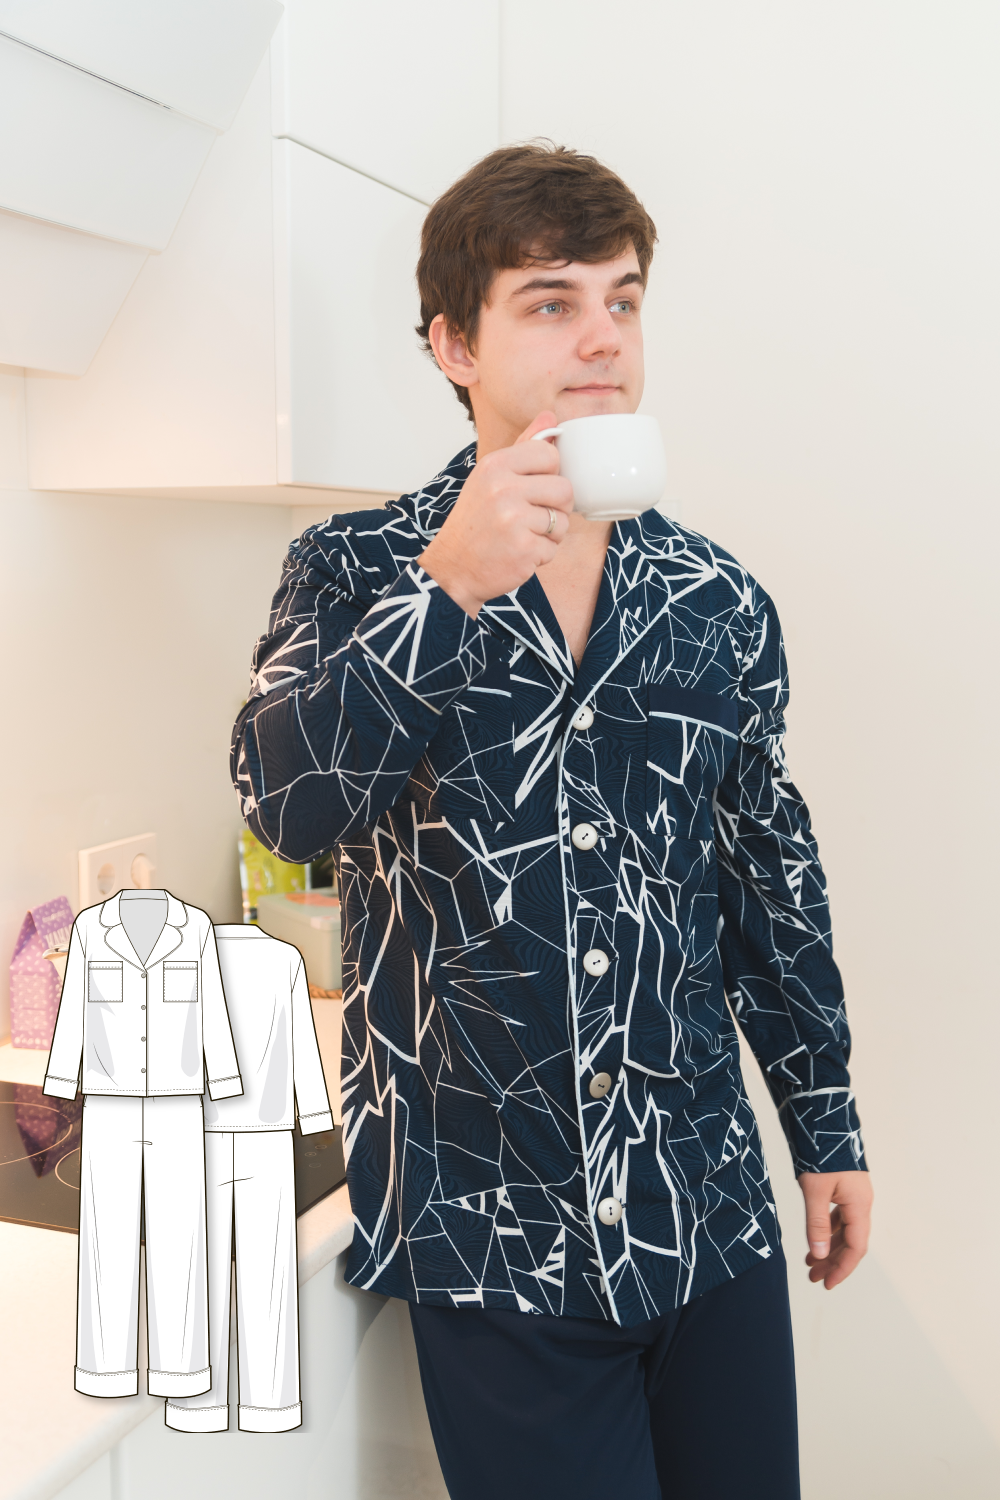 Pyjama For Men (long sleeve shirt and pants) #5114